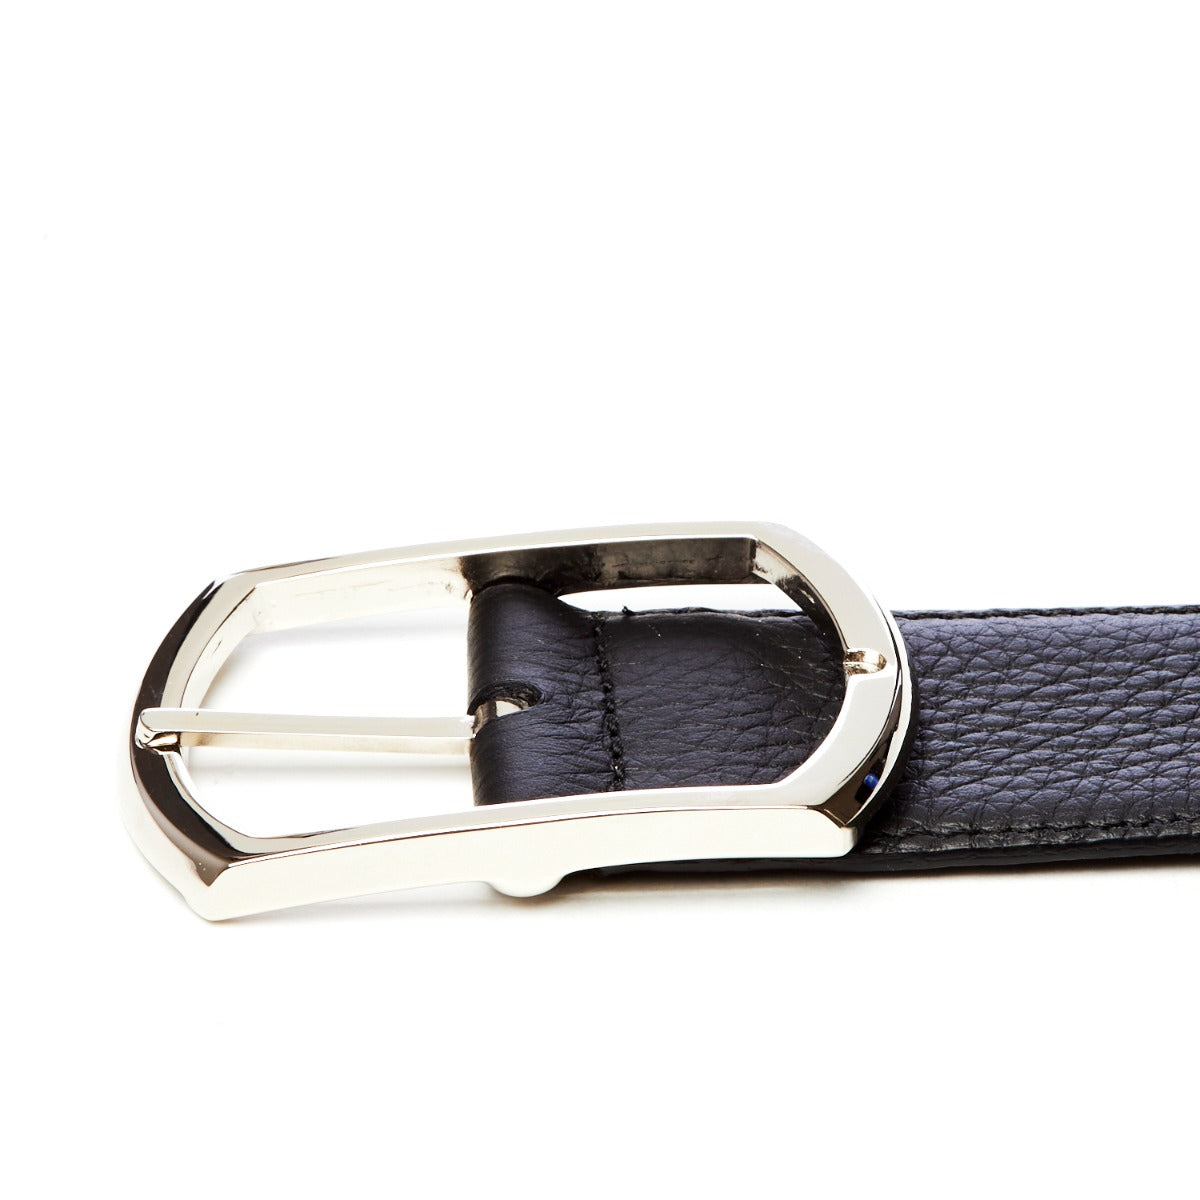 A Sovereign Grade Black Grained Calfskin Reversible Belt from KirbyAllison.com with a metal buckle.